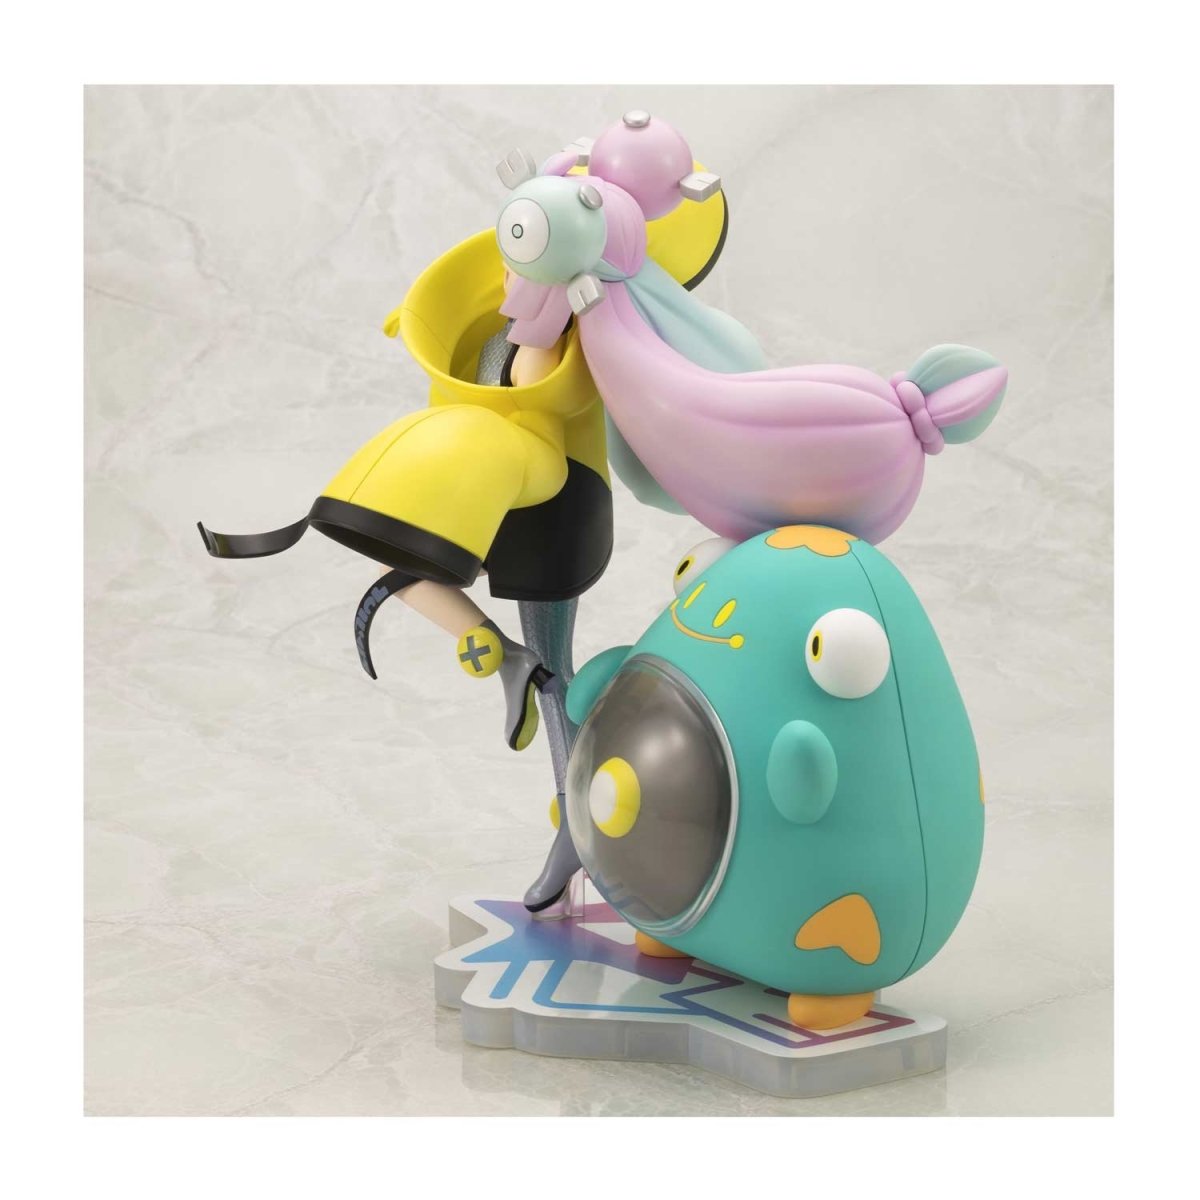 ¡Pokémon Center anuncia nueva figura de e-Nigma y Belibolt! 3